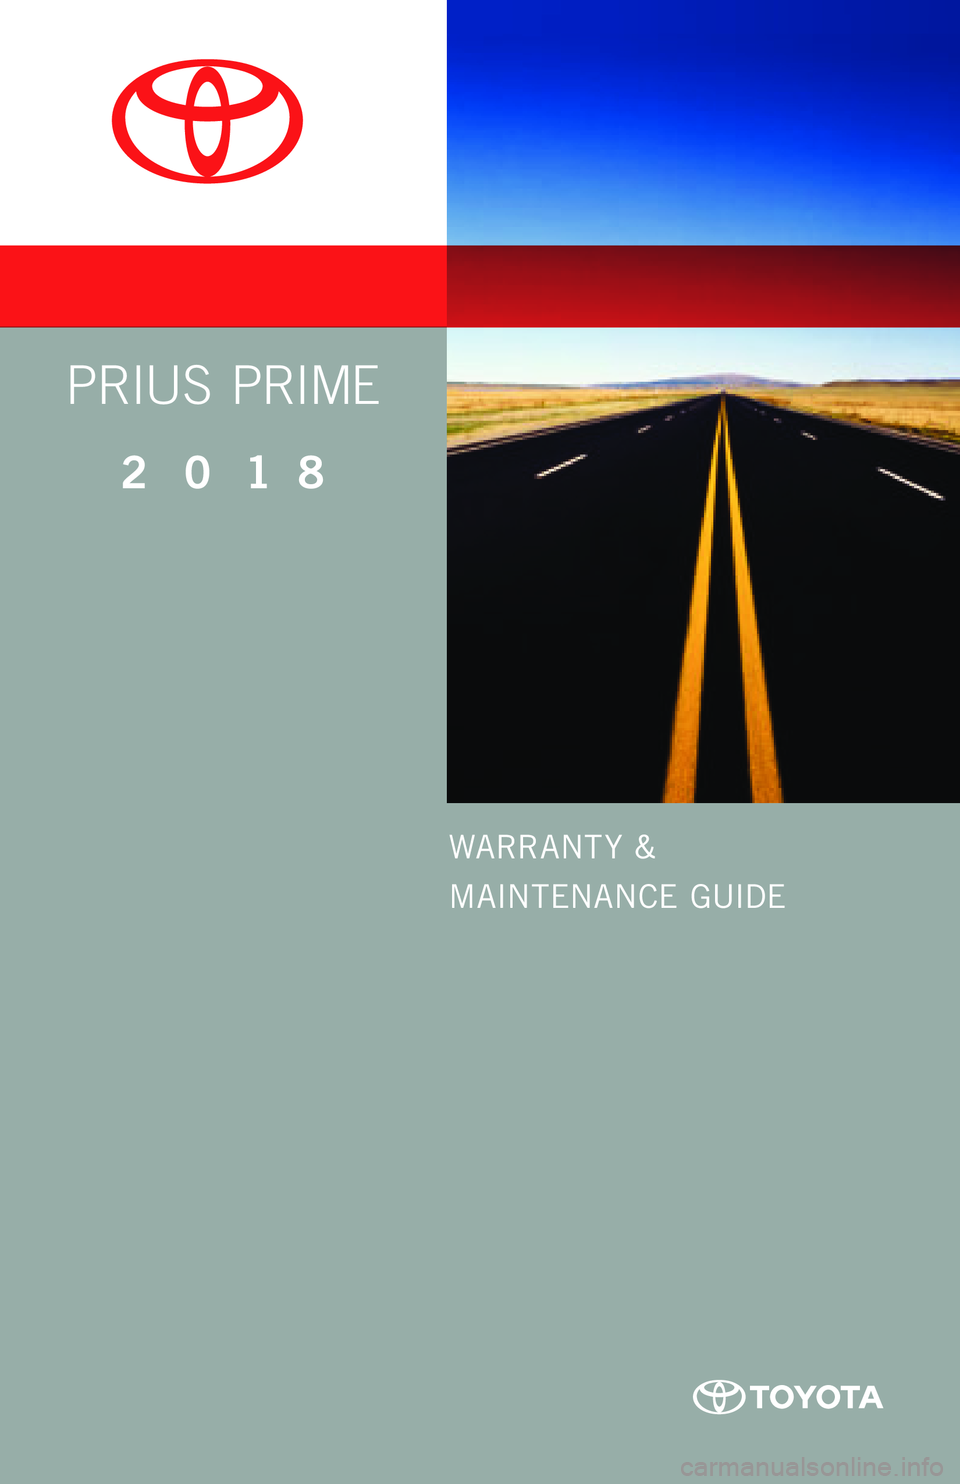 TOYOTA PRIUS PRIME 2018  Warranties & Maintenance Guides (in English) WARRANT Y &
MAINTENANCE GUIDE
Printed  in  U.S.A . 12/17
17-TCS -09999
PRIUS  PRIME
2 0 1 8 
www.toyota.com
17-TCS-09999_WMG_Cover_PRIUS_PRIME_1_1F_lm.indd   112/7/17   11:26 AM  